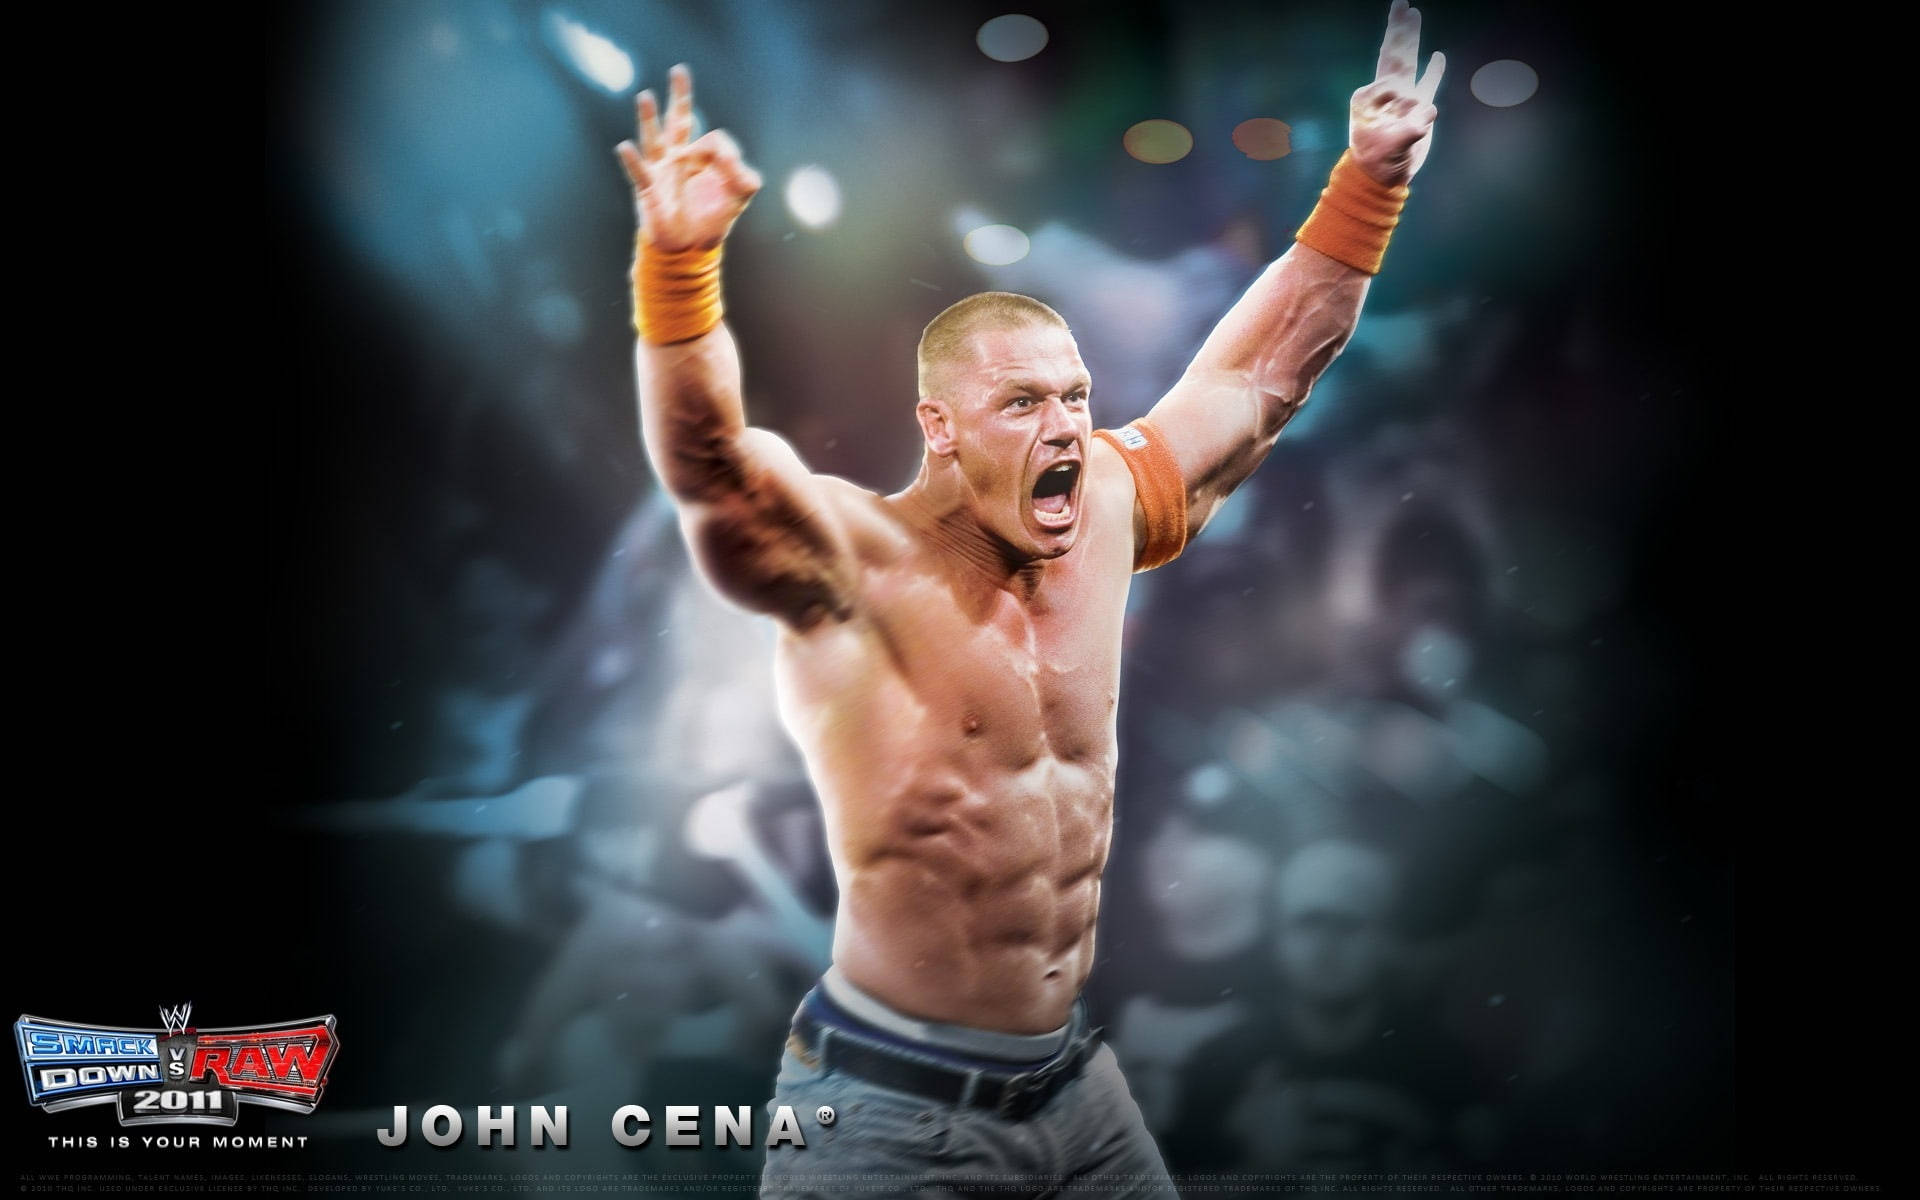 Top 999+ John Cena Wallpaper Full HD, 4K Free to Use